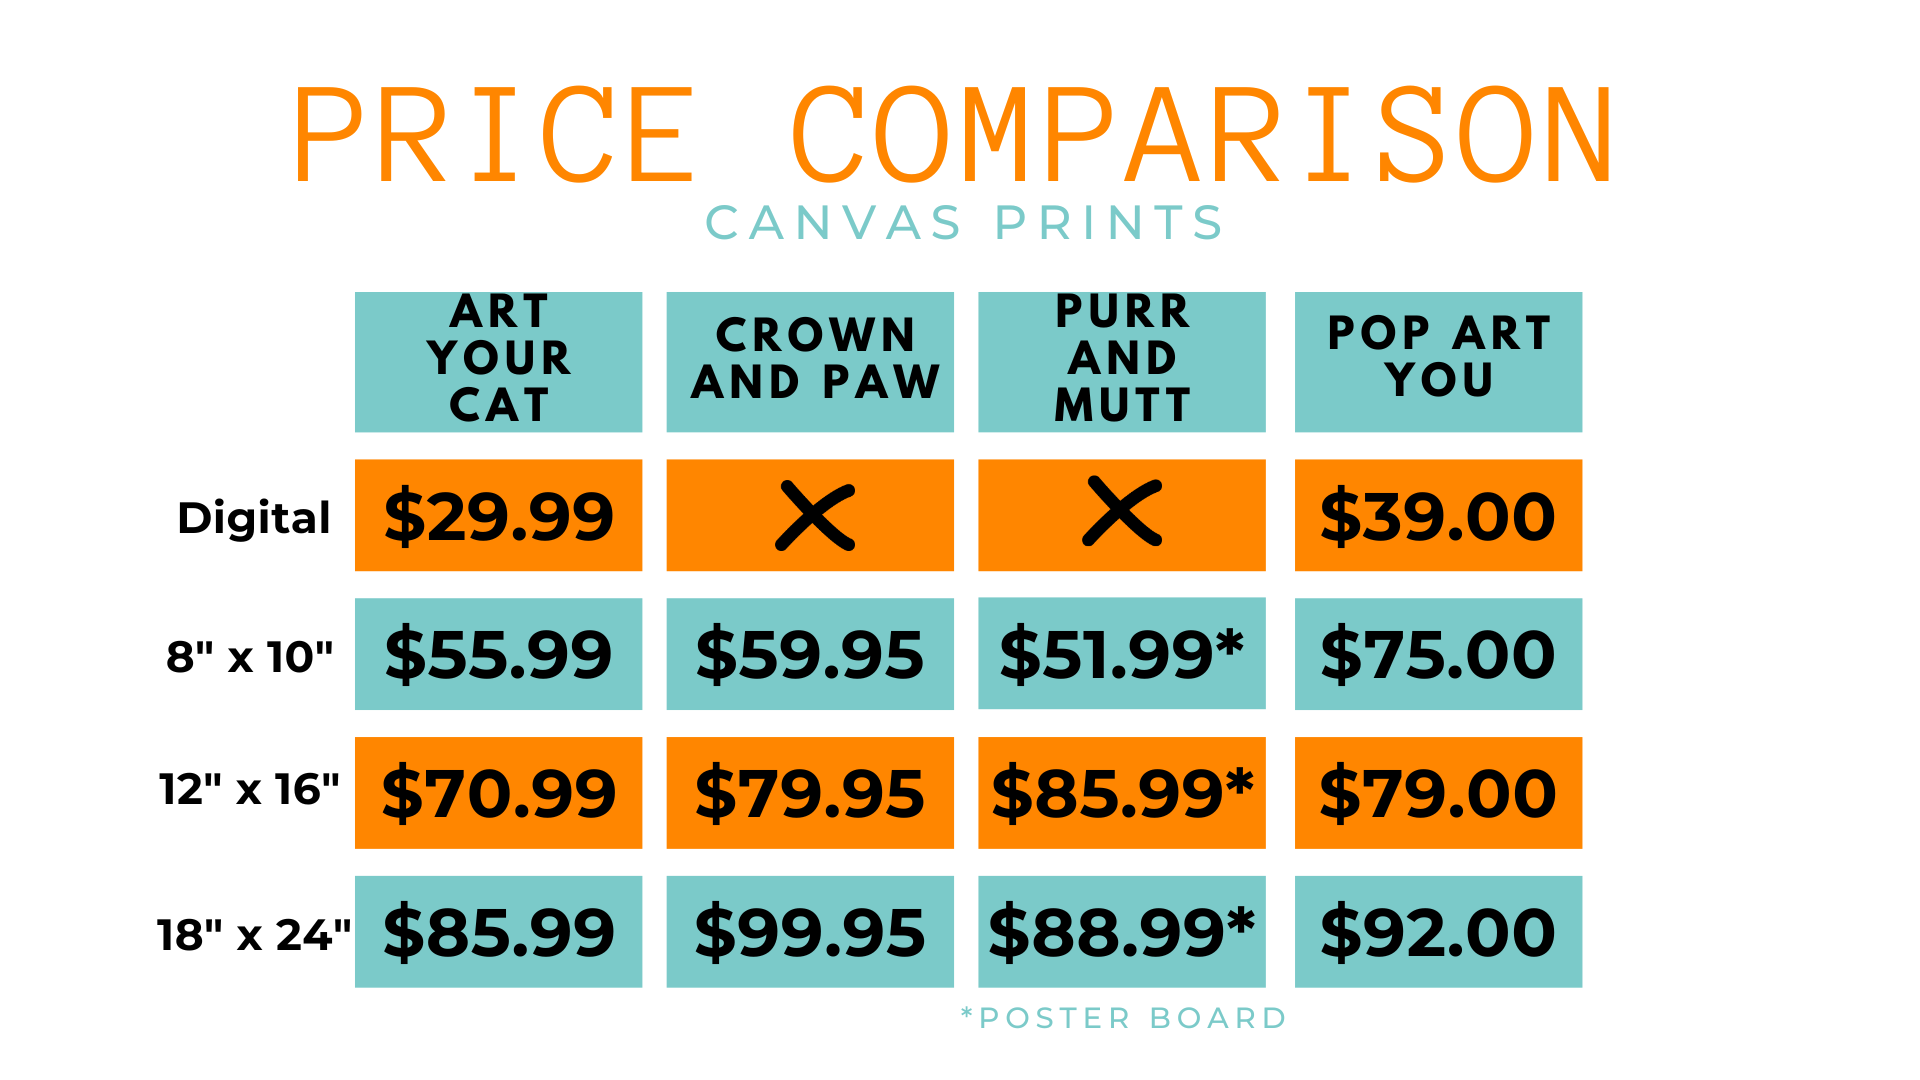 Price comparison chart against competitors